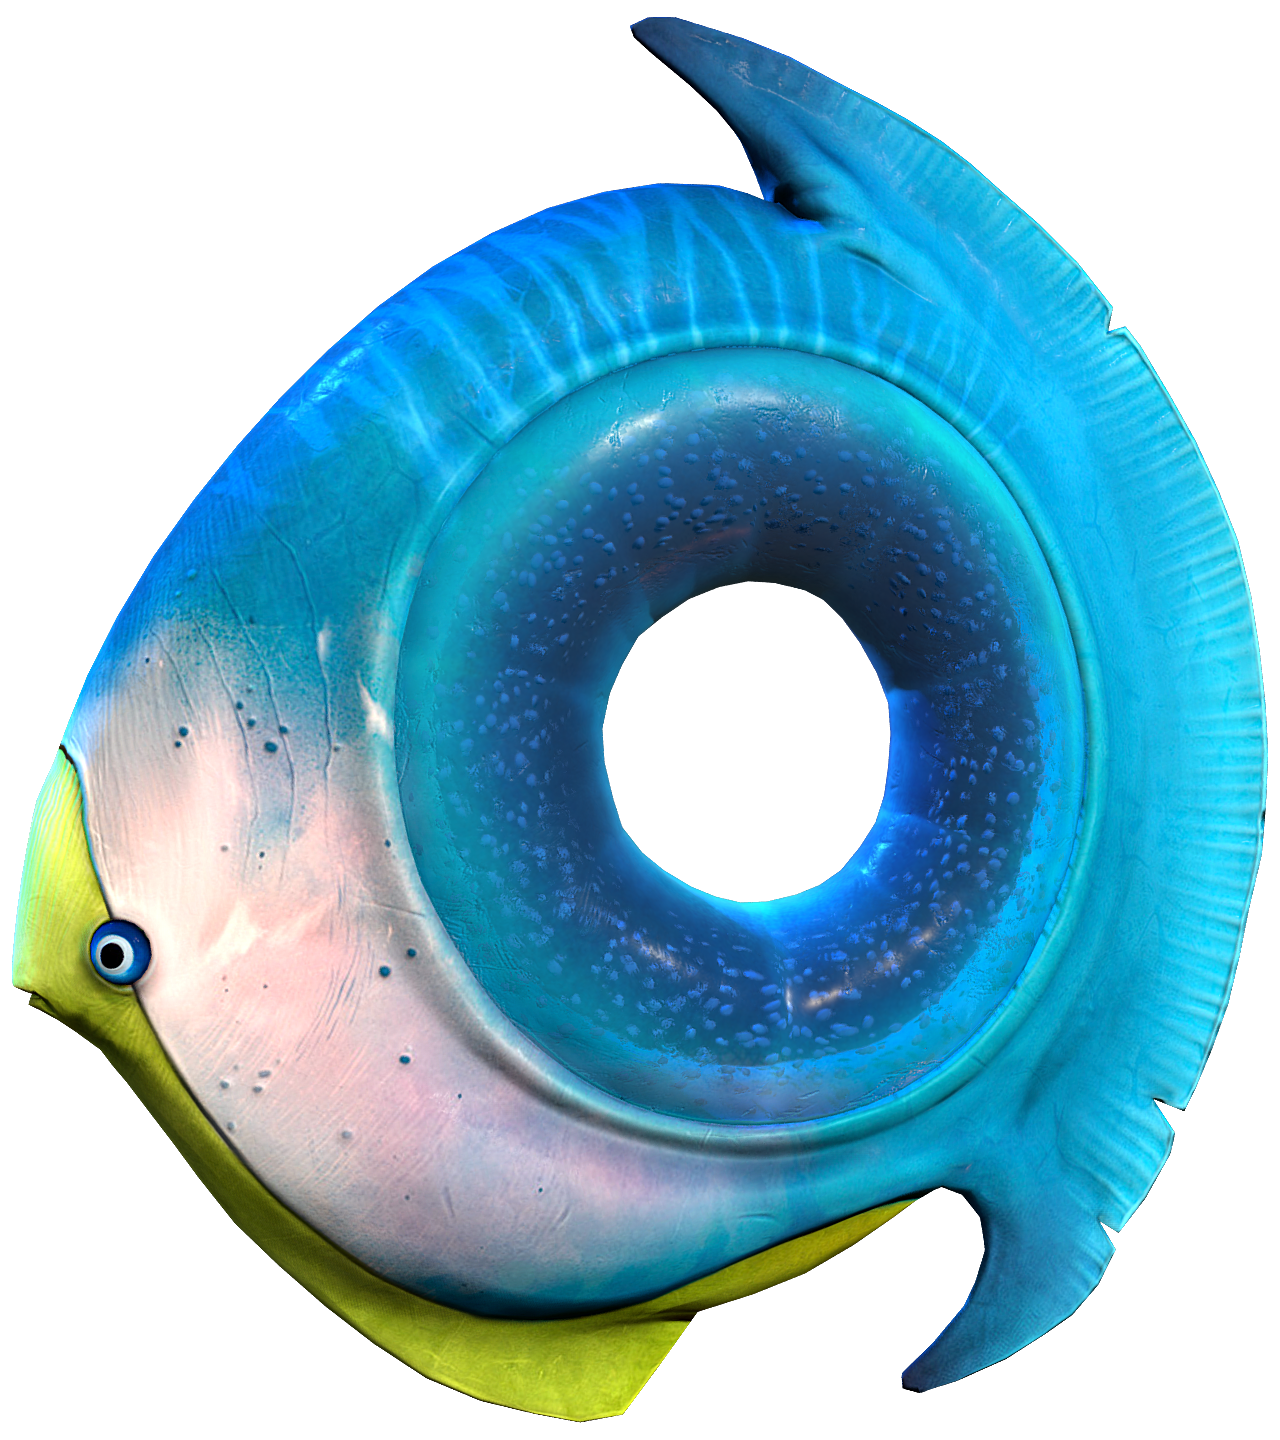 Blobfish, VS Battles Wiki